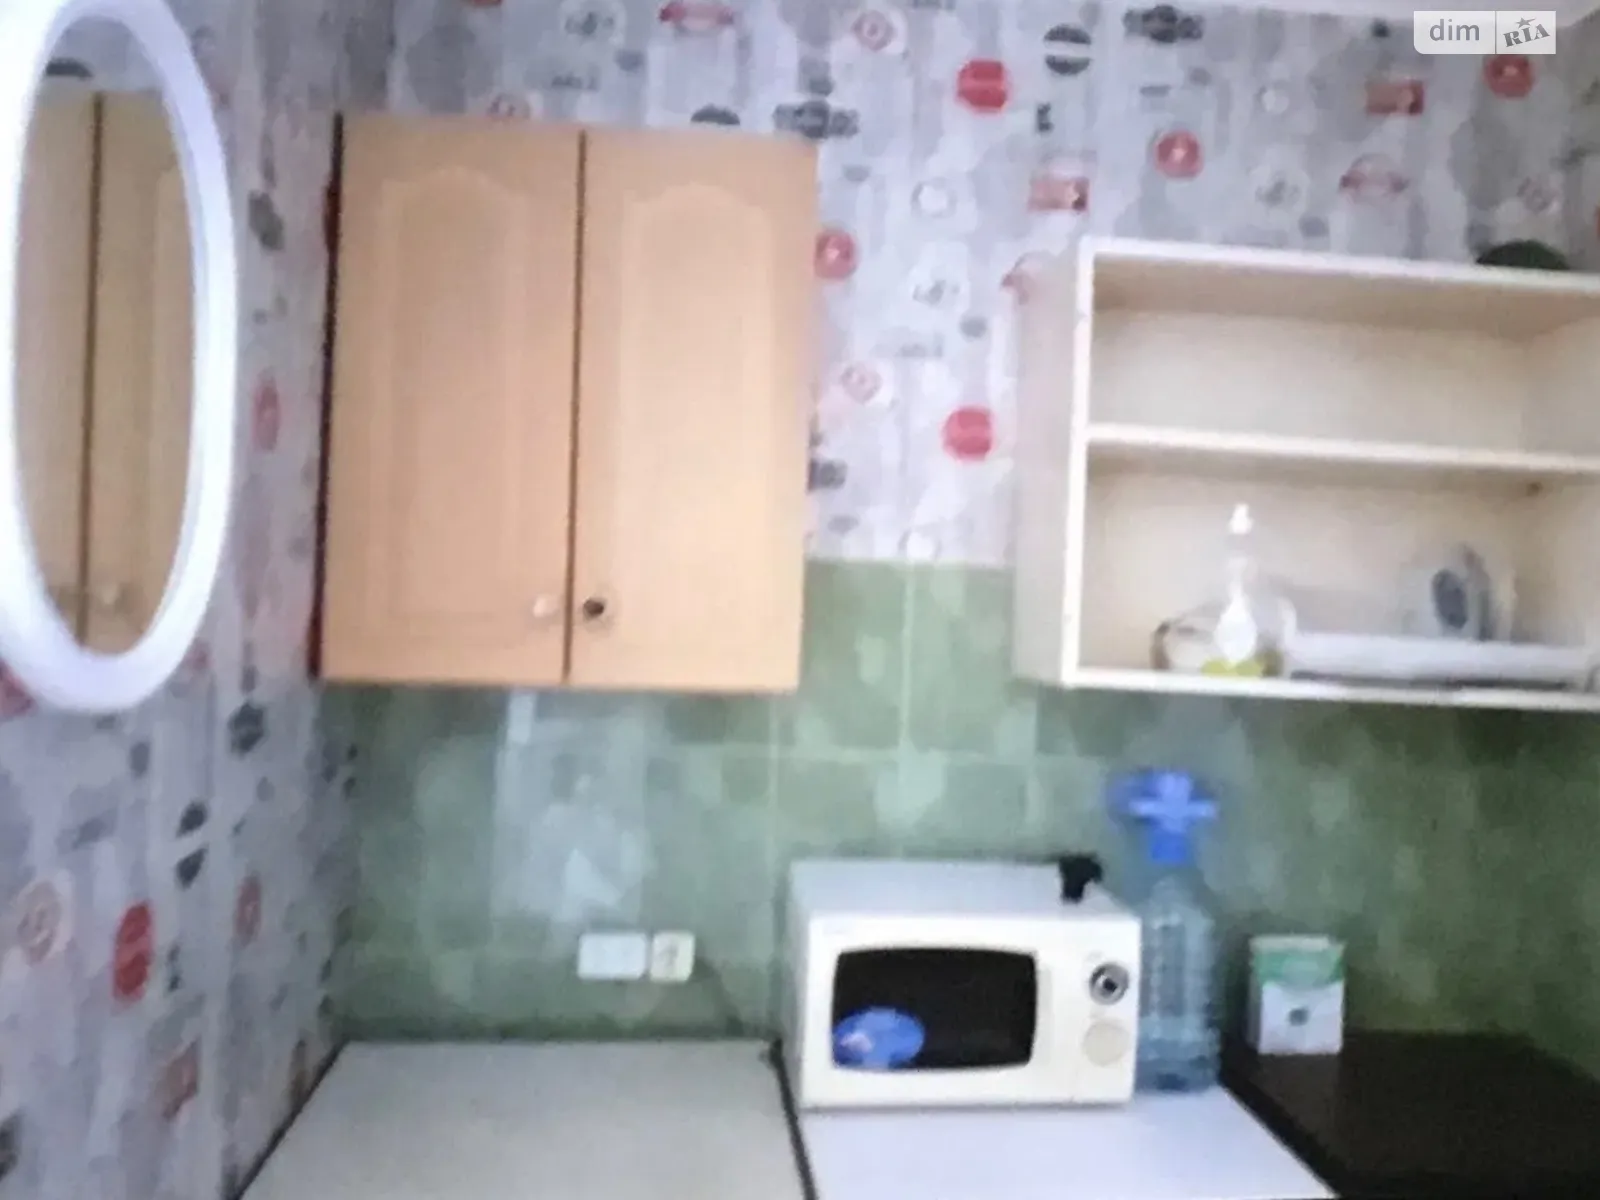 Продается комната 18 кв. м в Одессе, цена: 7000 $ - фото 1